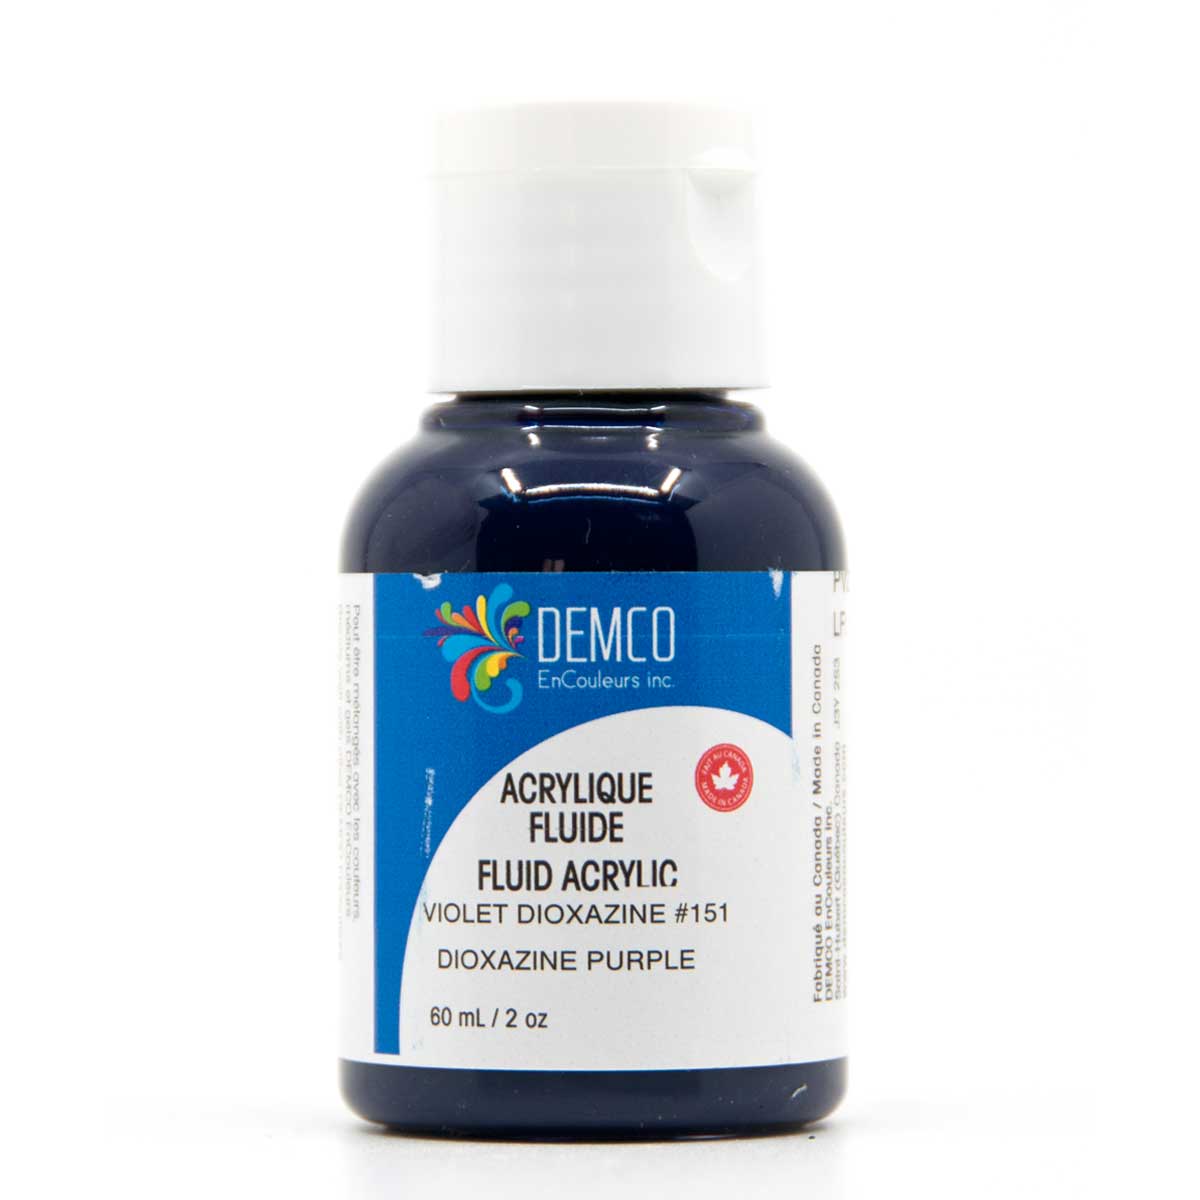 Demco Fluid Acrylic Paint - Dioxazine Purple 60 ml